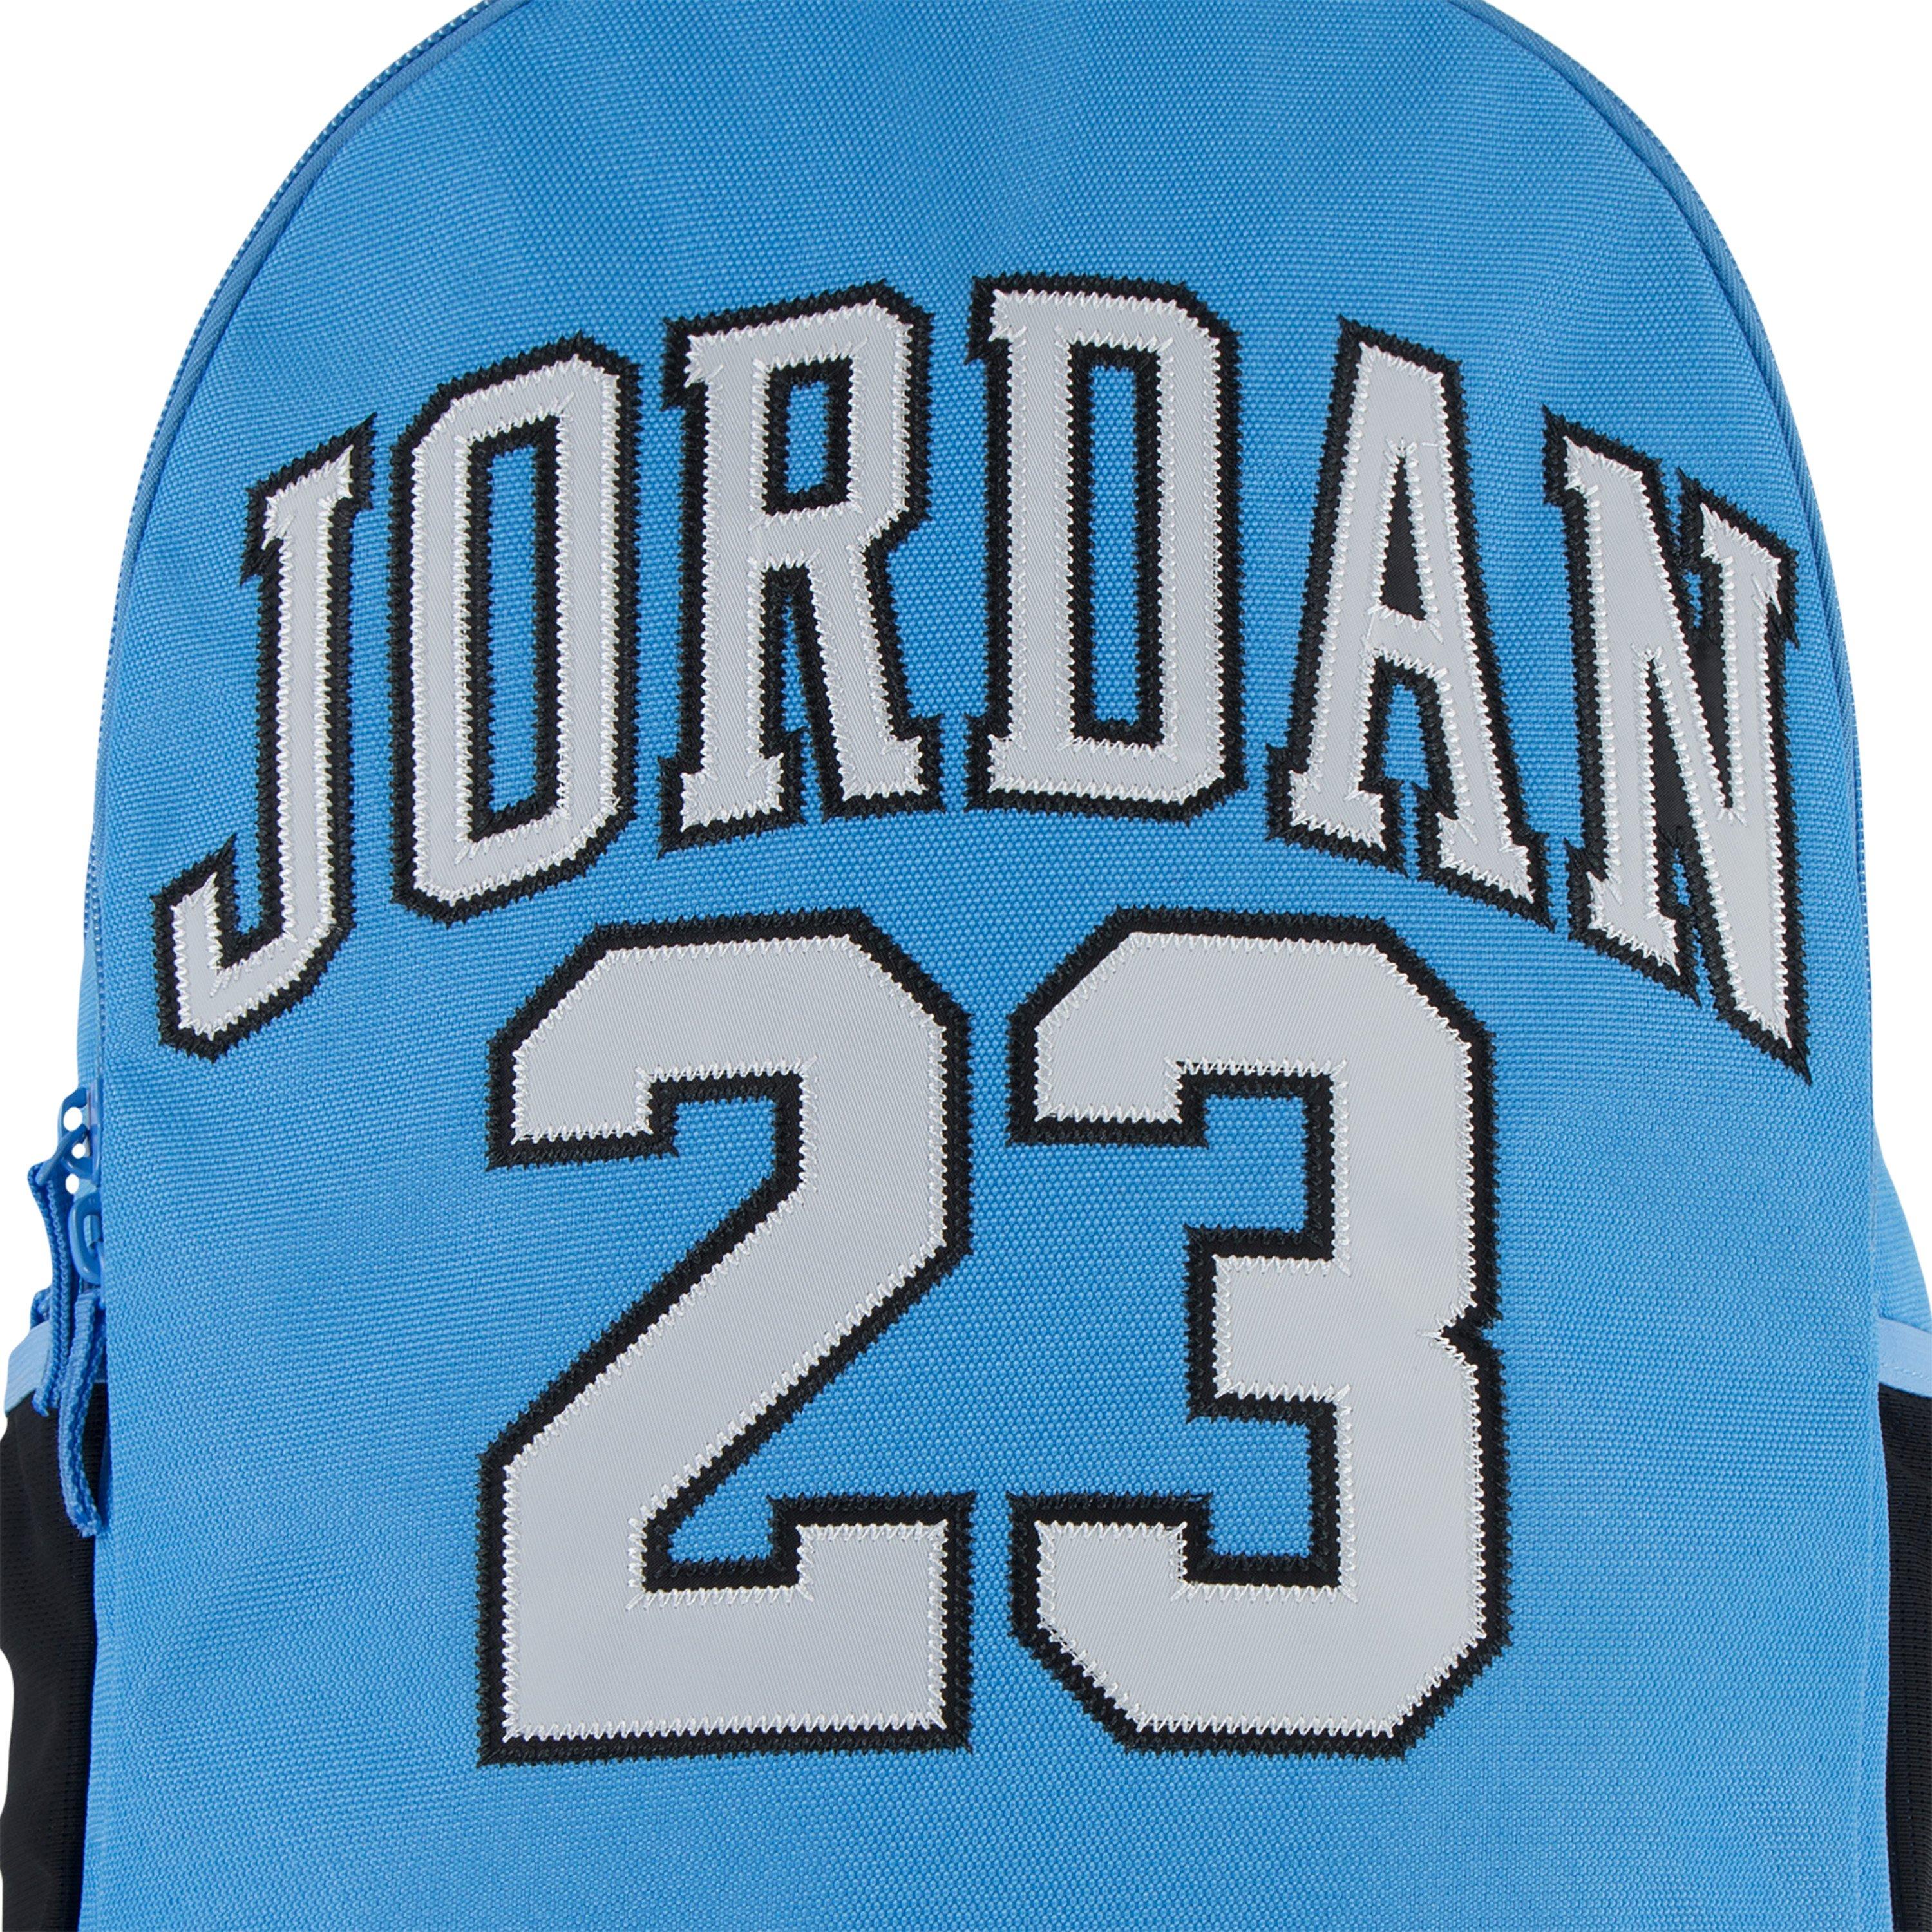 Jordan Phase 23 Basketball Shorts - White/Blue/Red